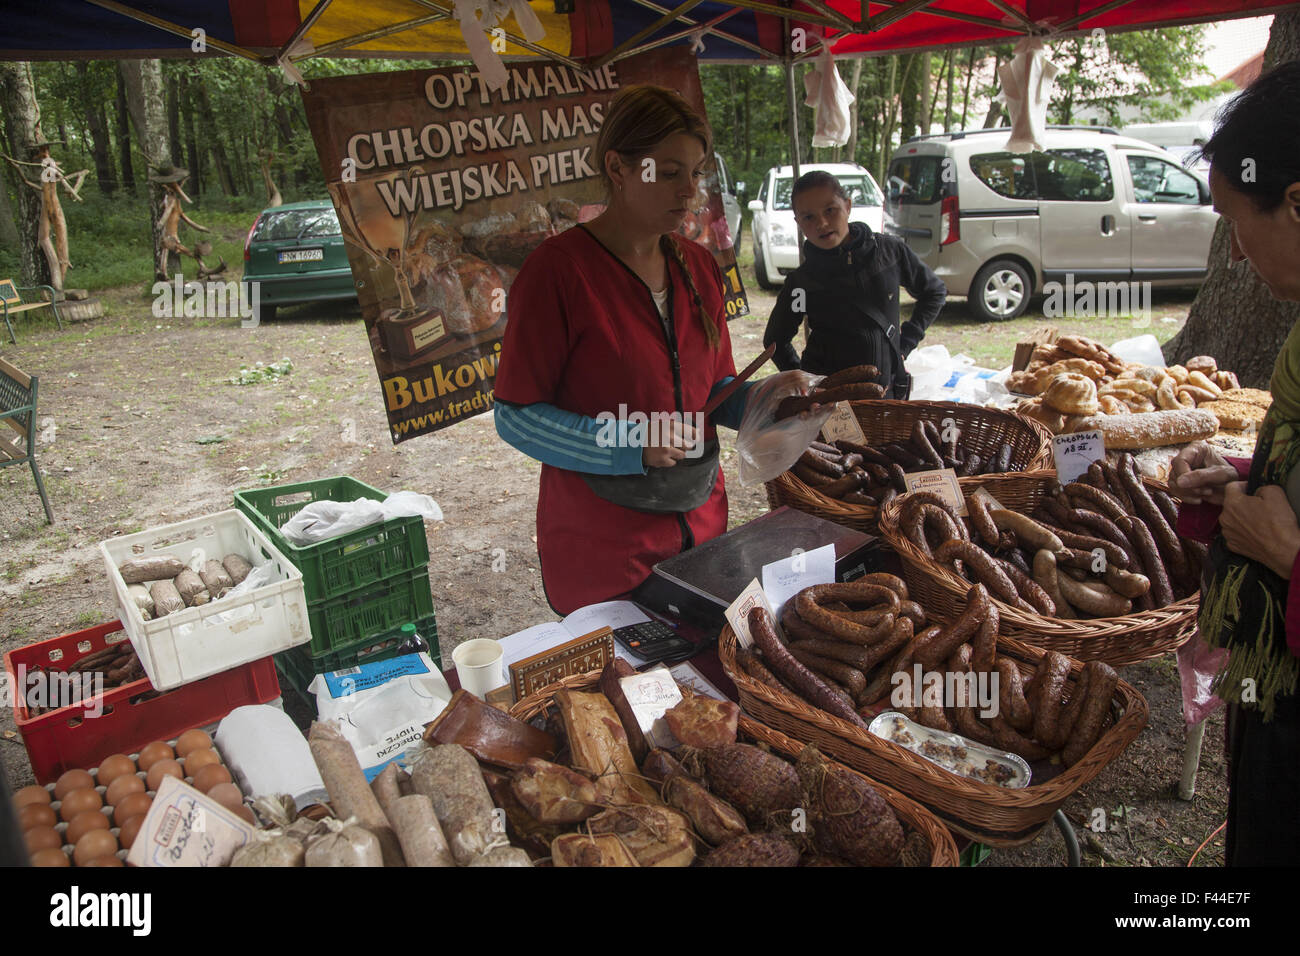 Freshly baked breads and Polish meats for sale at an international folk arts festival near Zielona Gora, Poland. Stock Photo